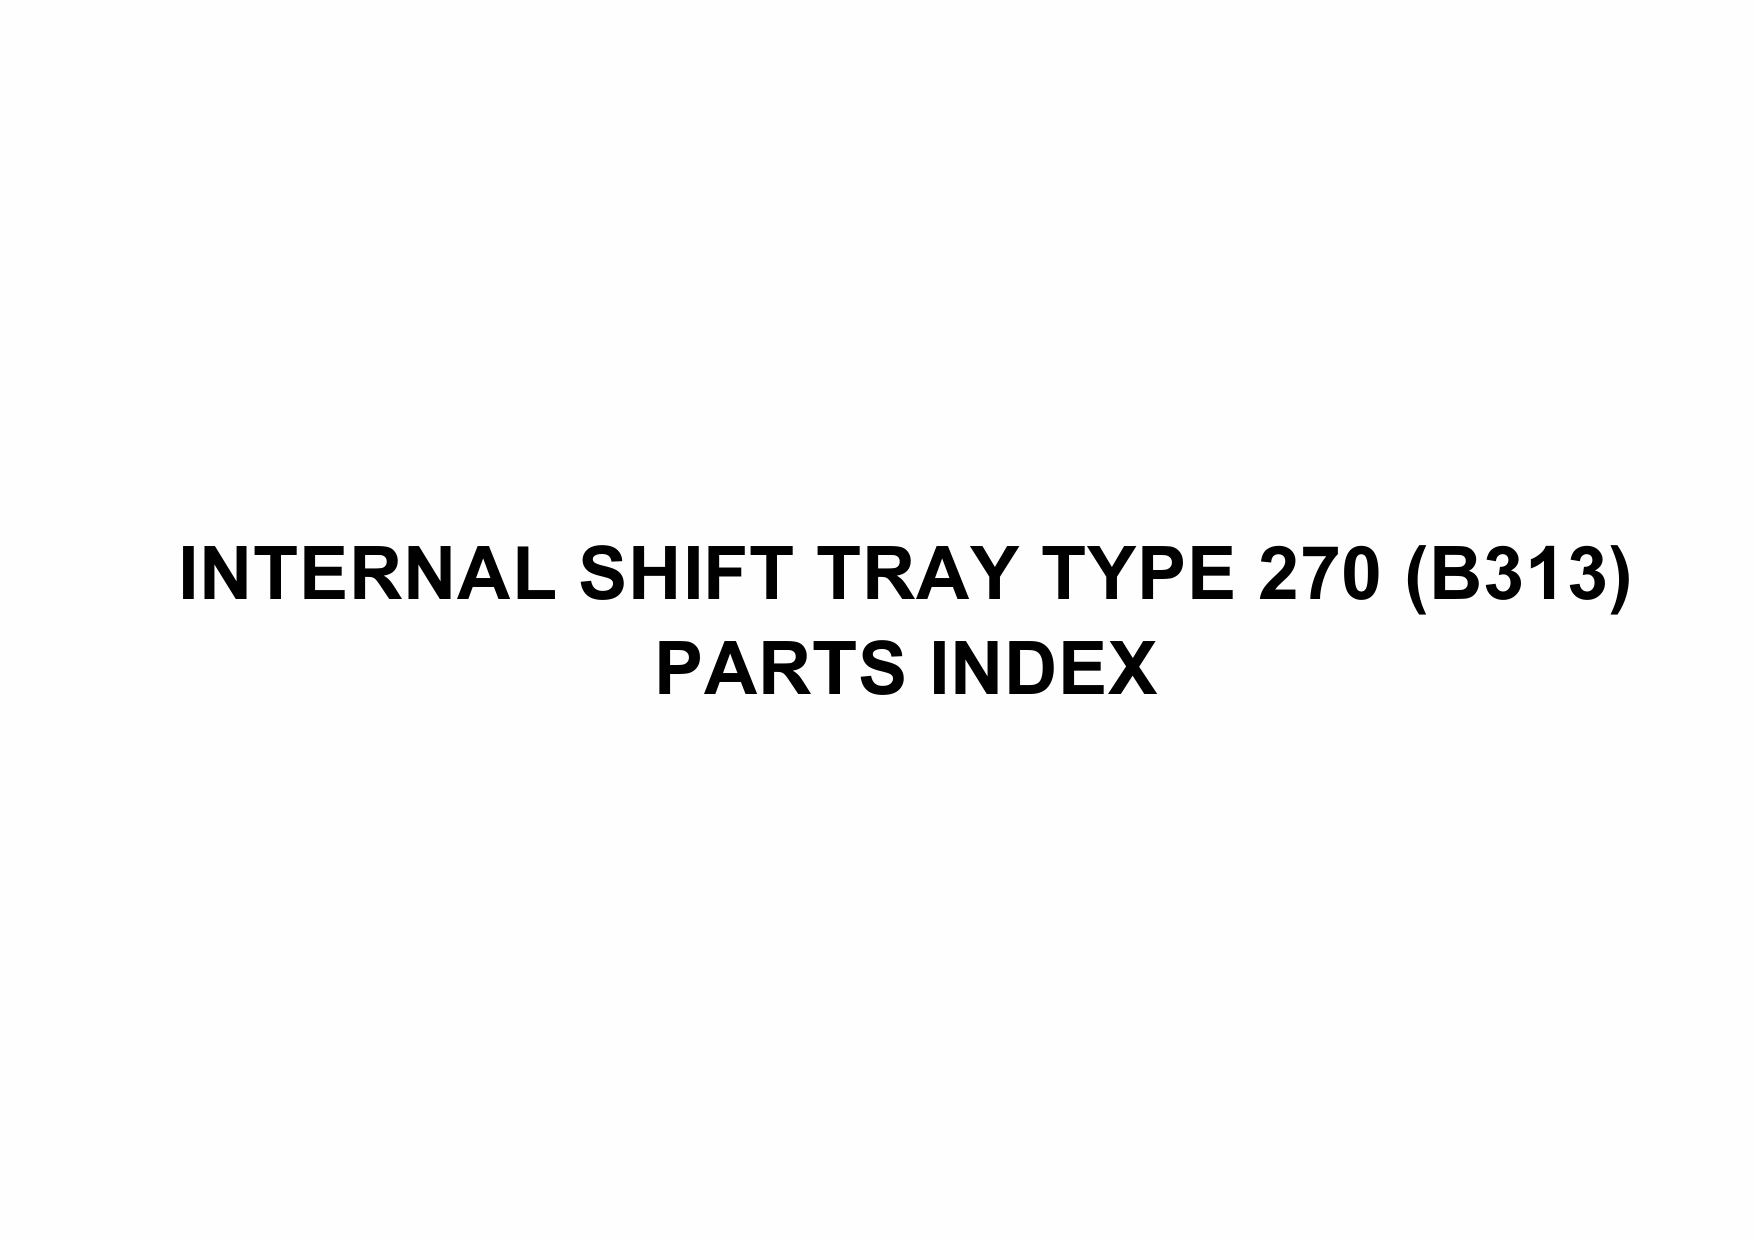 RICOH Options B313 INTERNAL-SHIFT-TRAY-TYPE-270 Parts Catalog PDF download-5